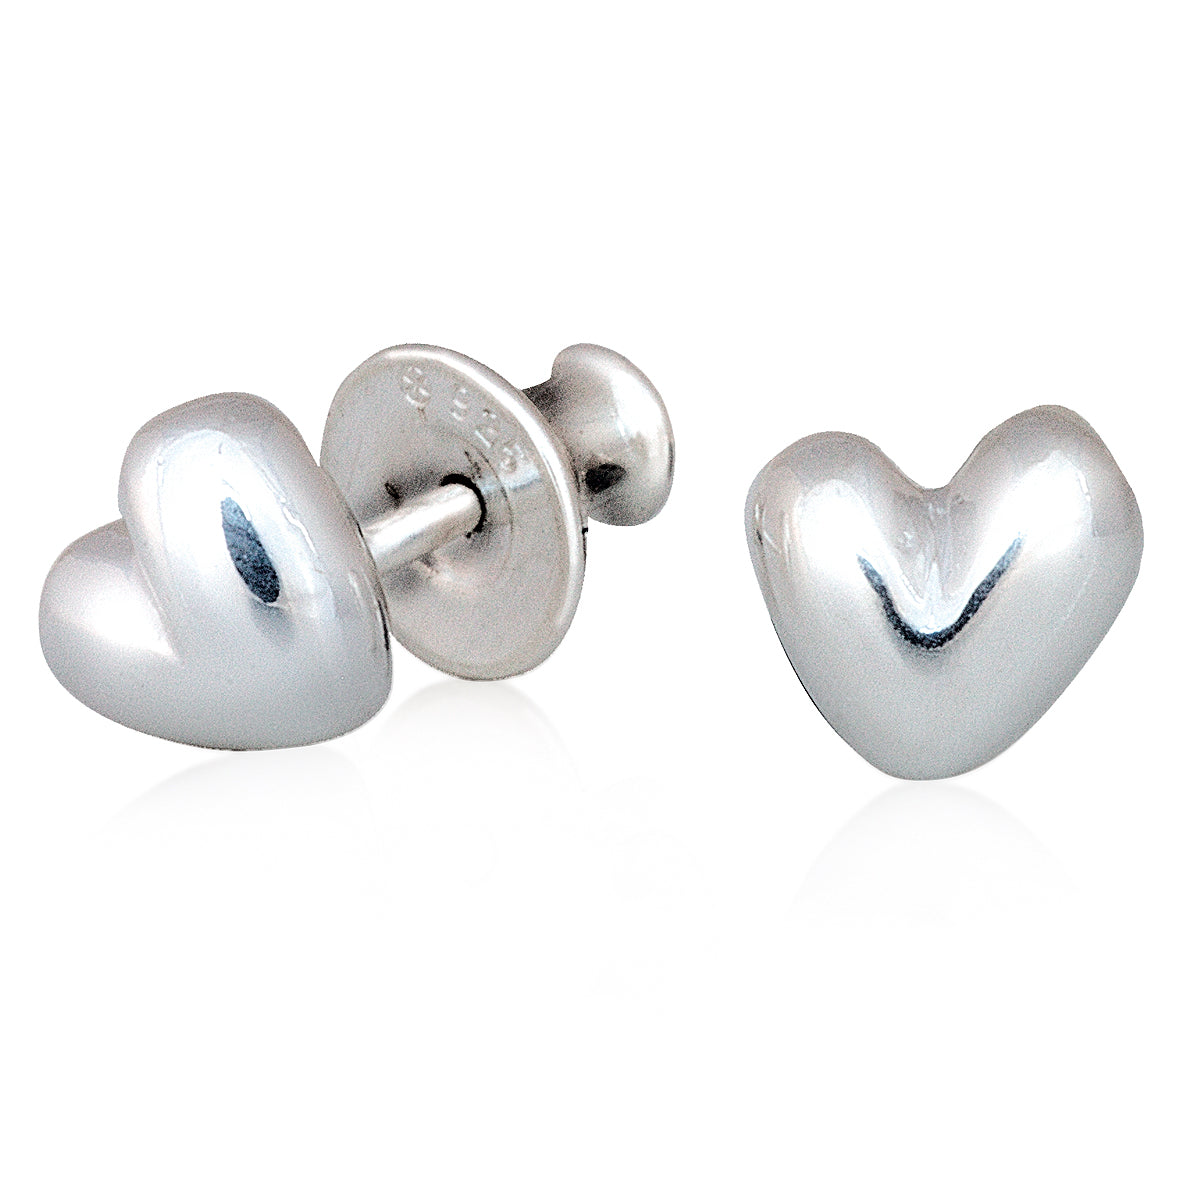 Sweetheart Silver Stud Earrings everyday designer silver studs high quality scarlett jewellery